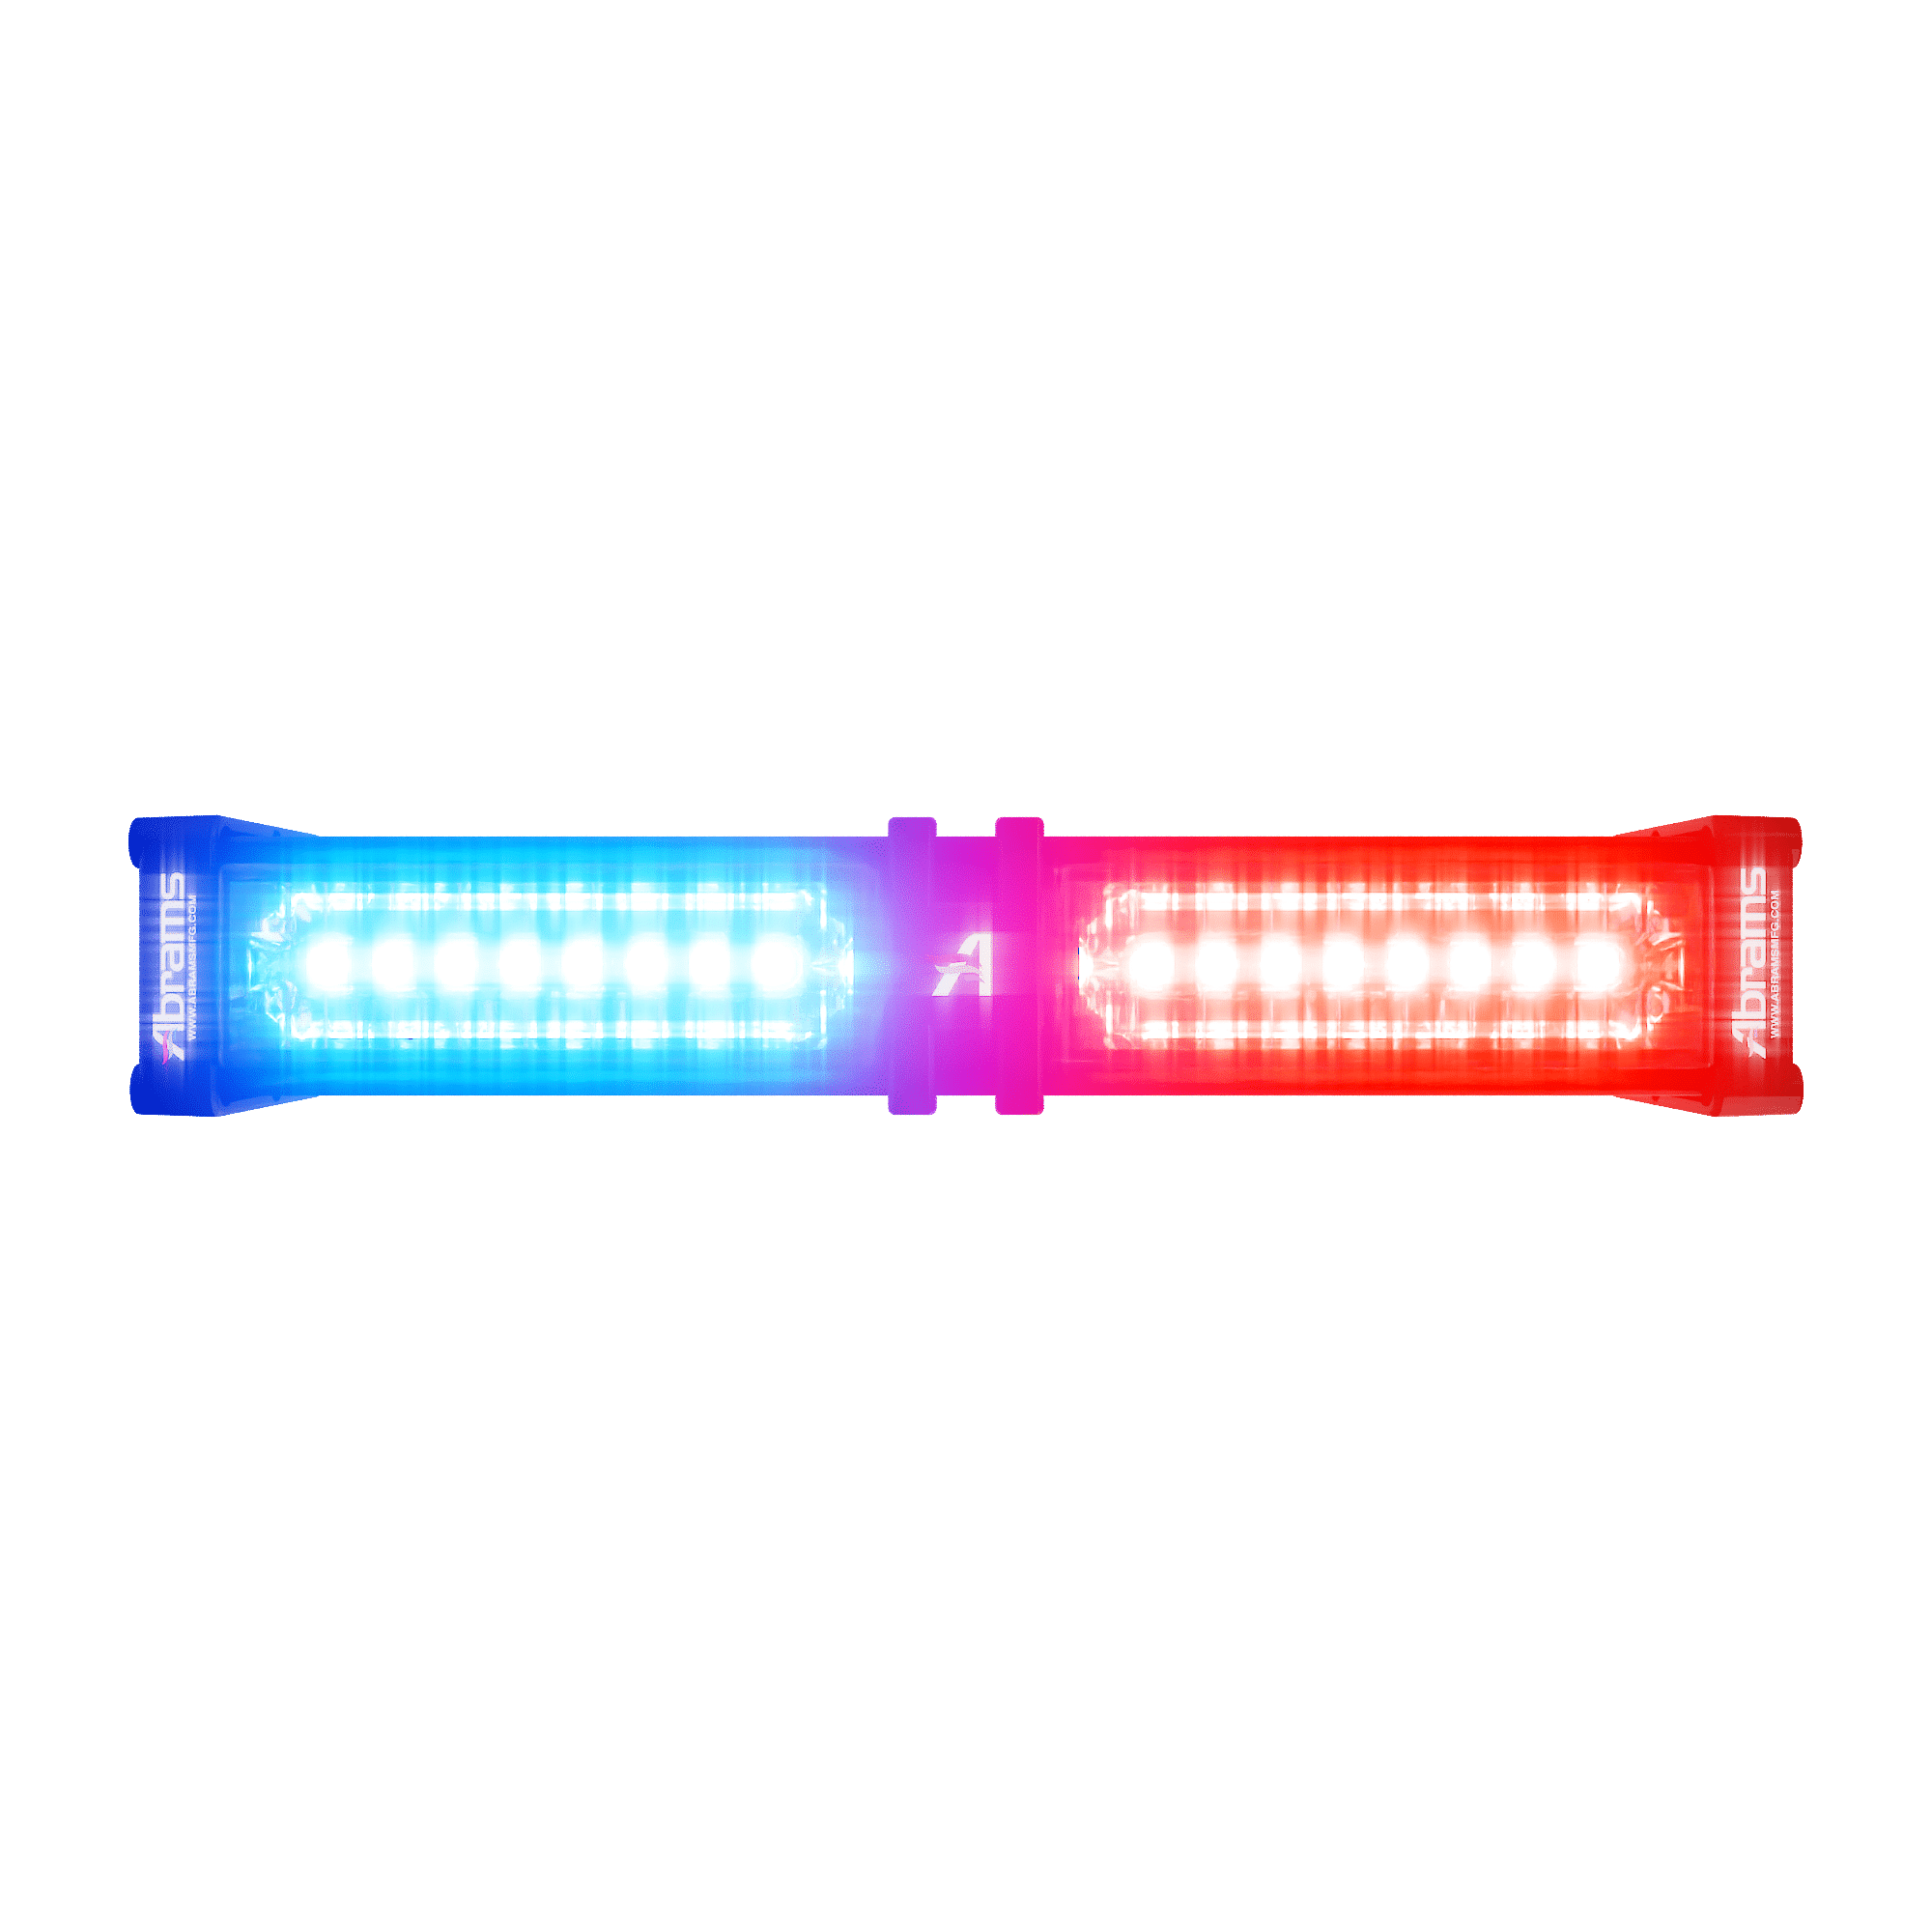 Focus 200 Series LED Dash & Deck Lightstick